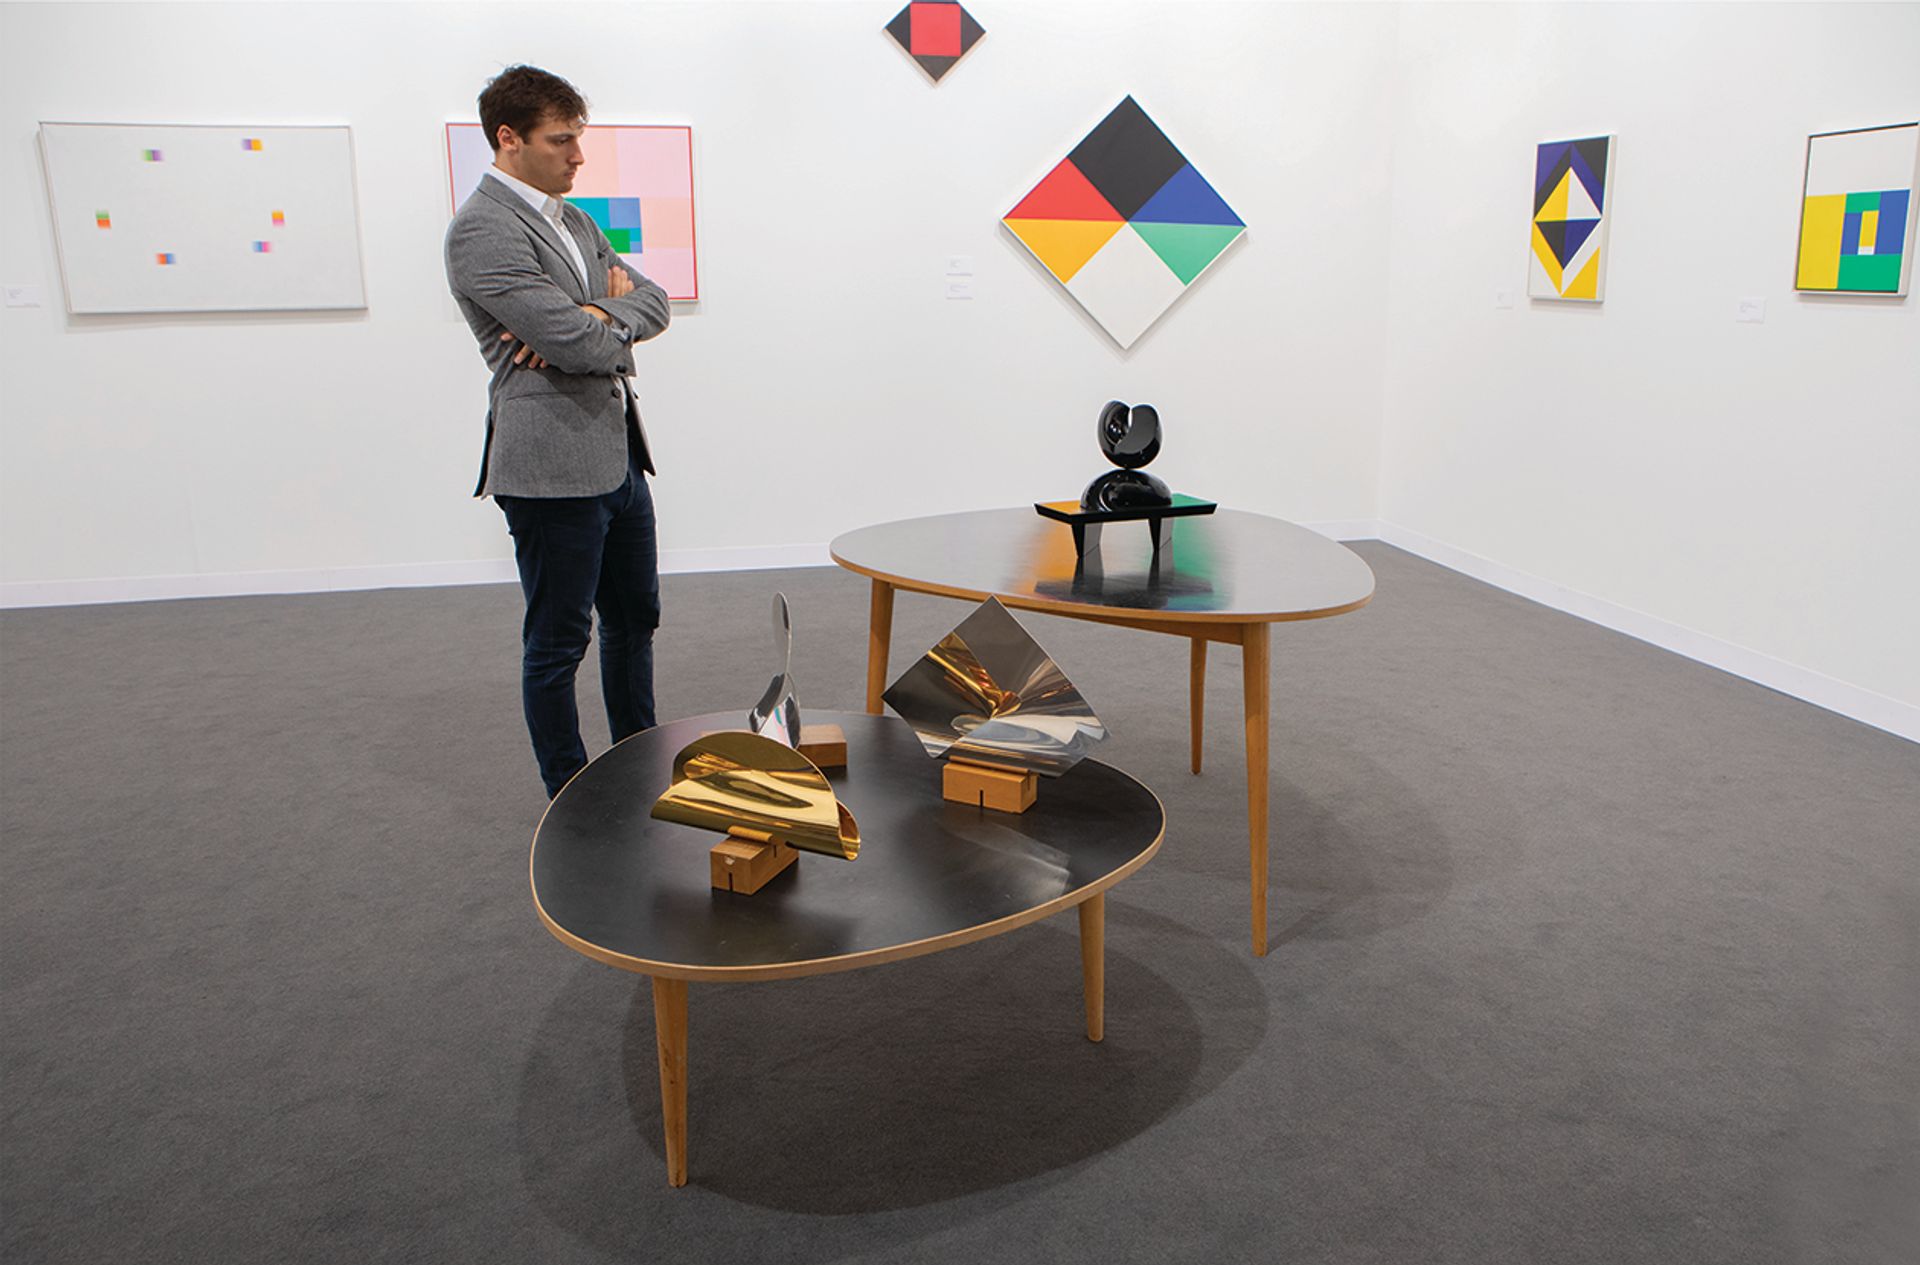 Larkin Erdmann and Galerie Knoell are presenting Max Bill’s work David Owens